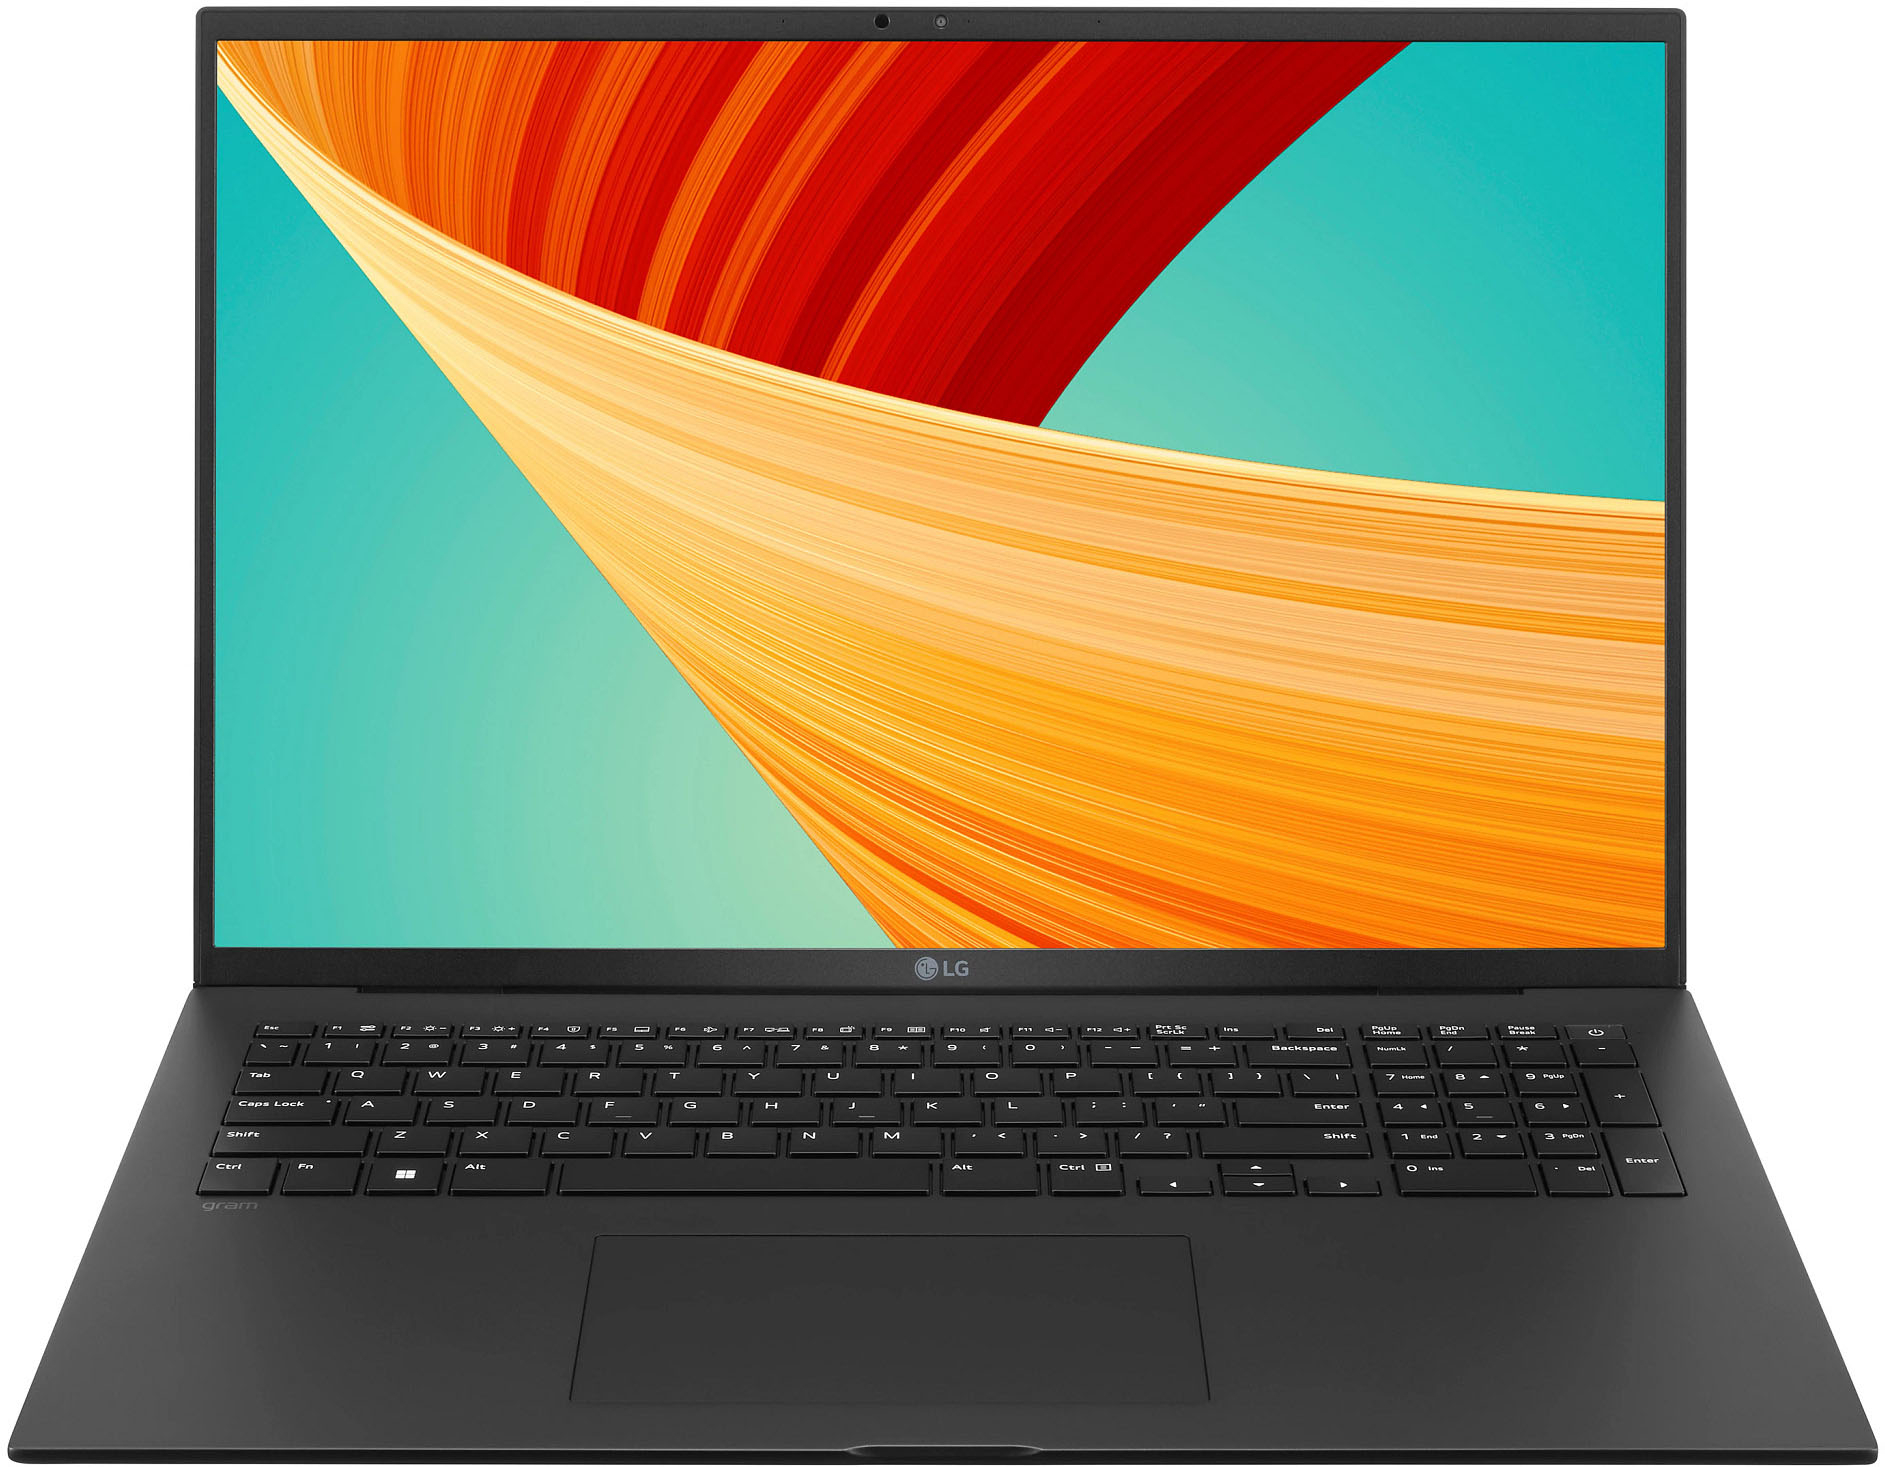 LG gram ” Laptop Intel Evo Platform th Gen Intel Core i7 with